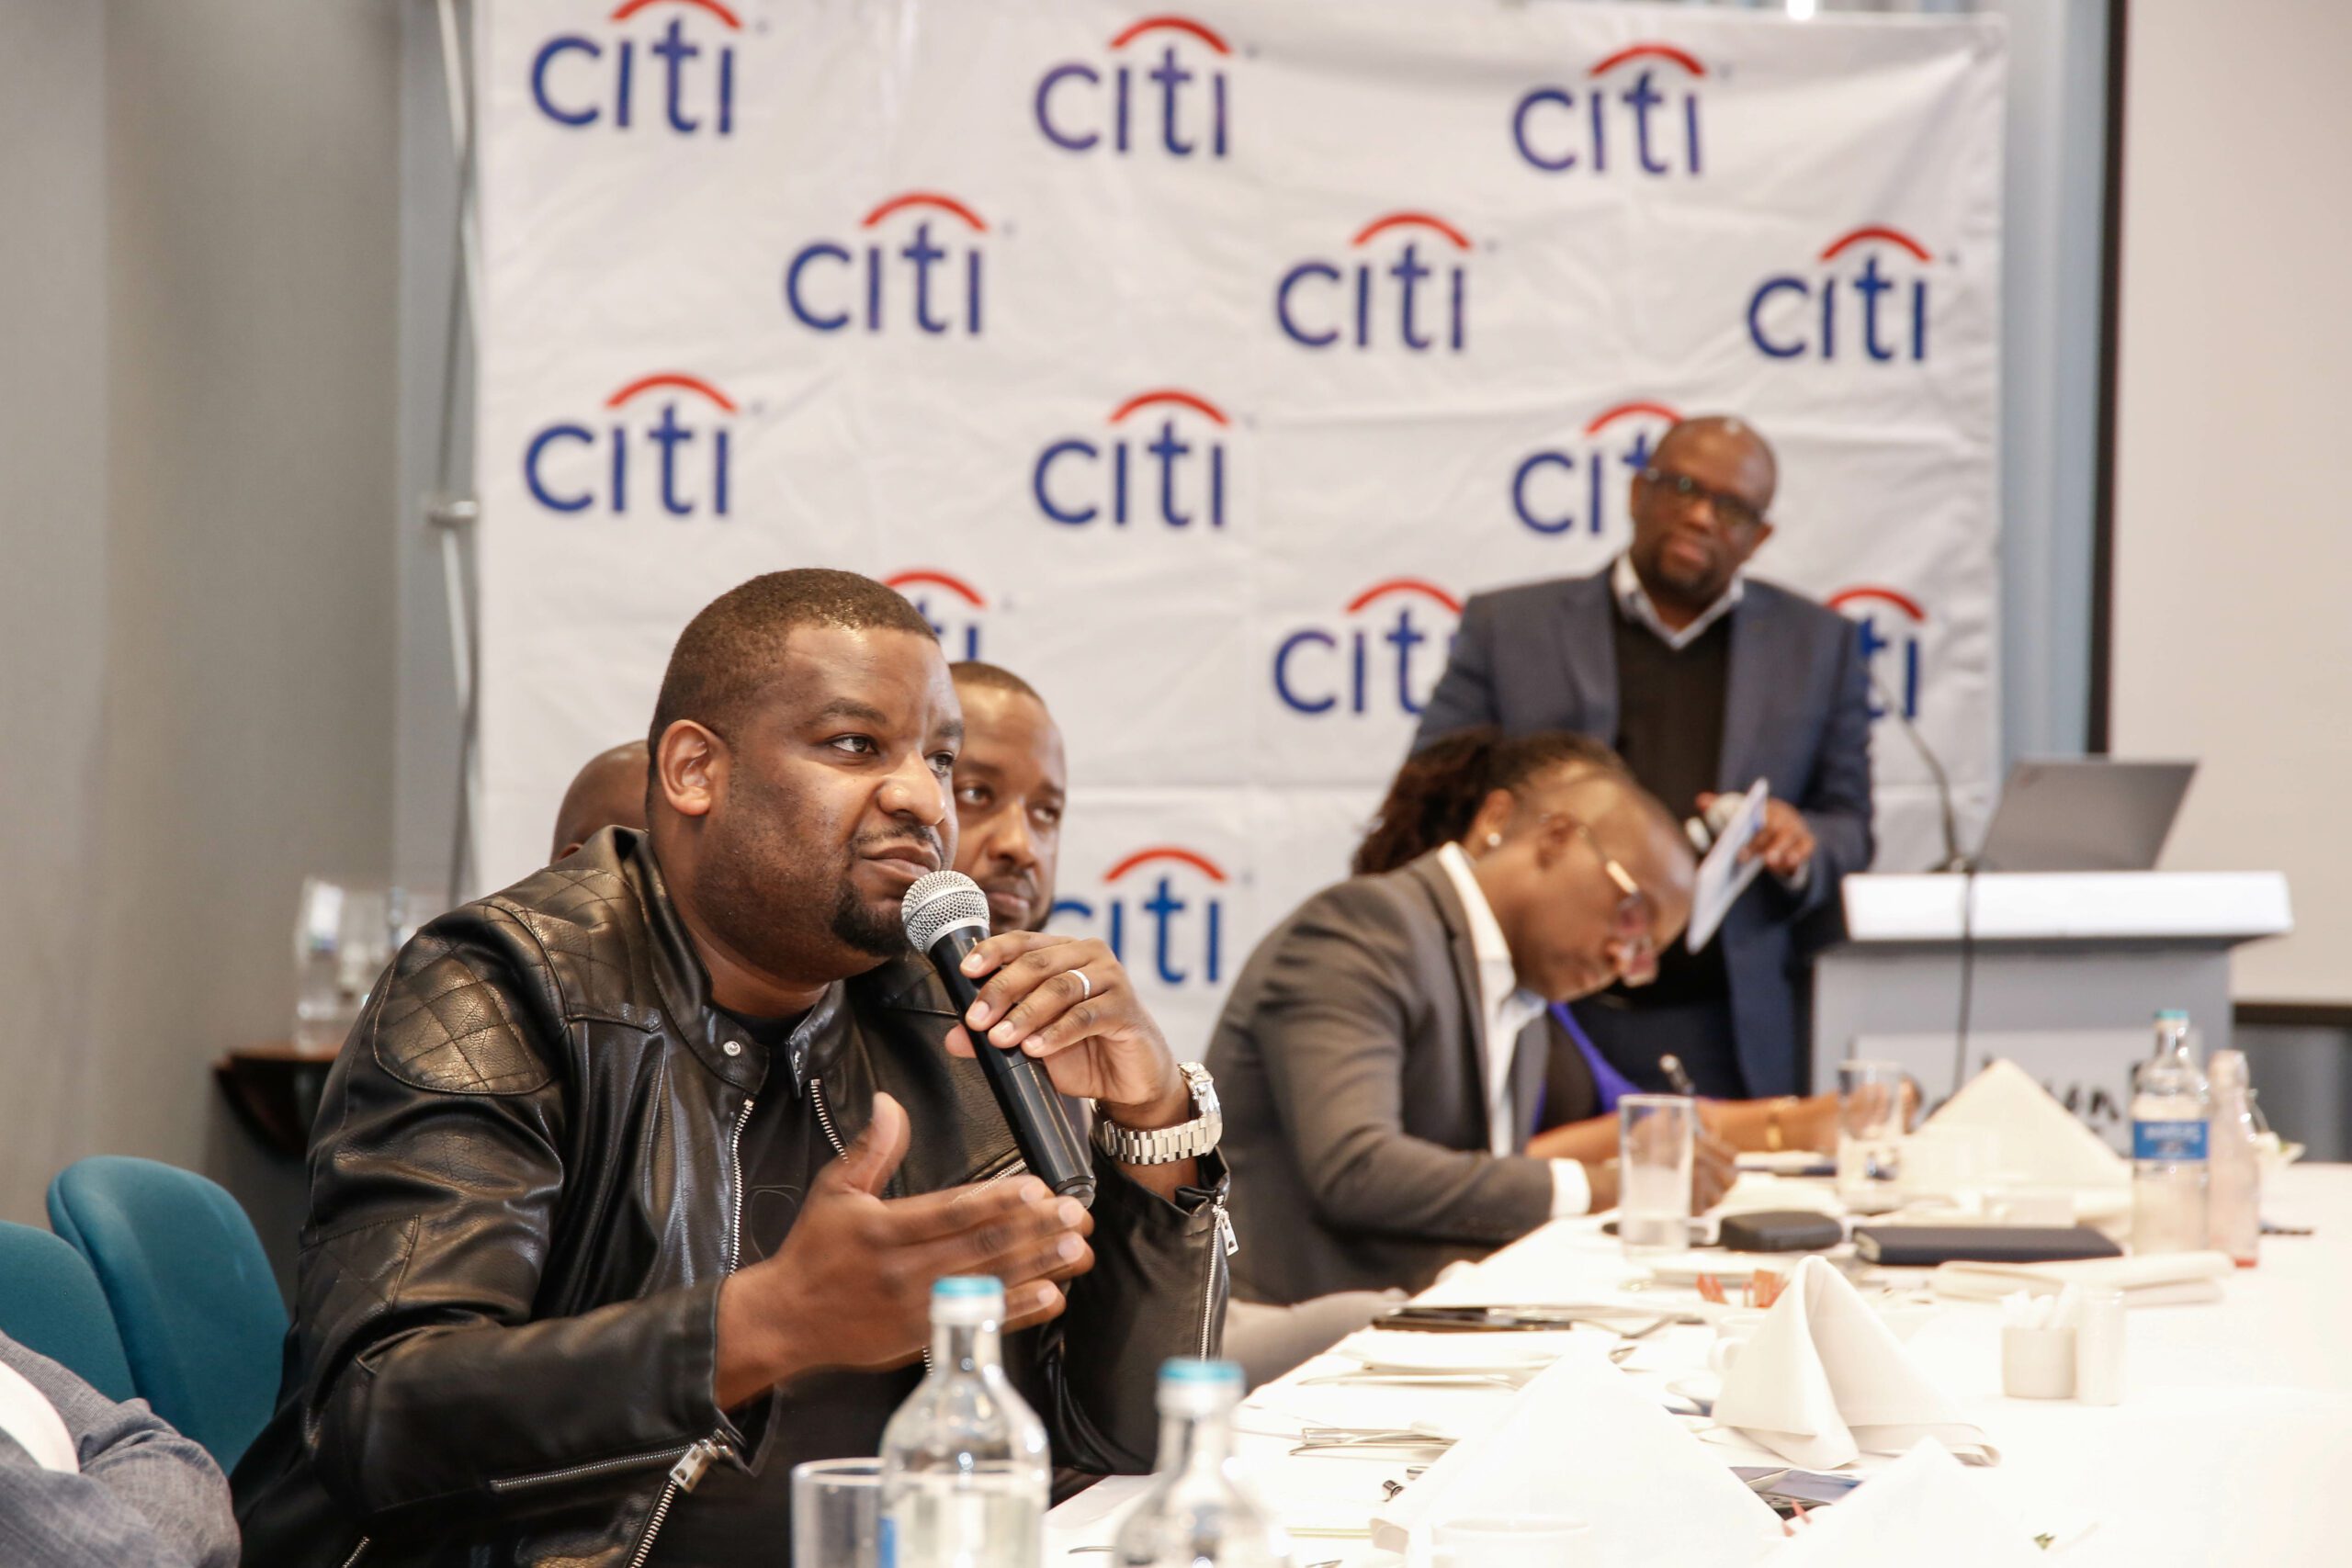 Safaricom CIO, George Njuguna speaking at the CITI round table event on 22nd July 2022